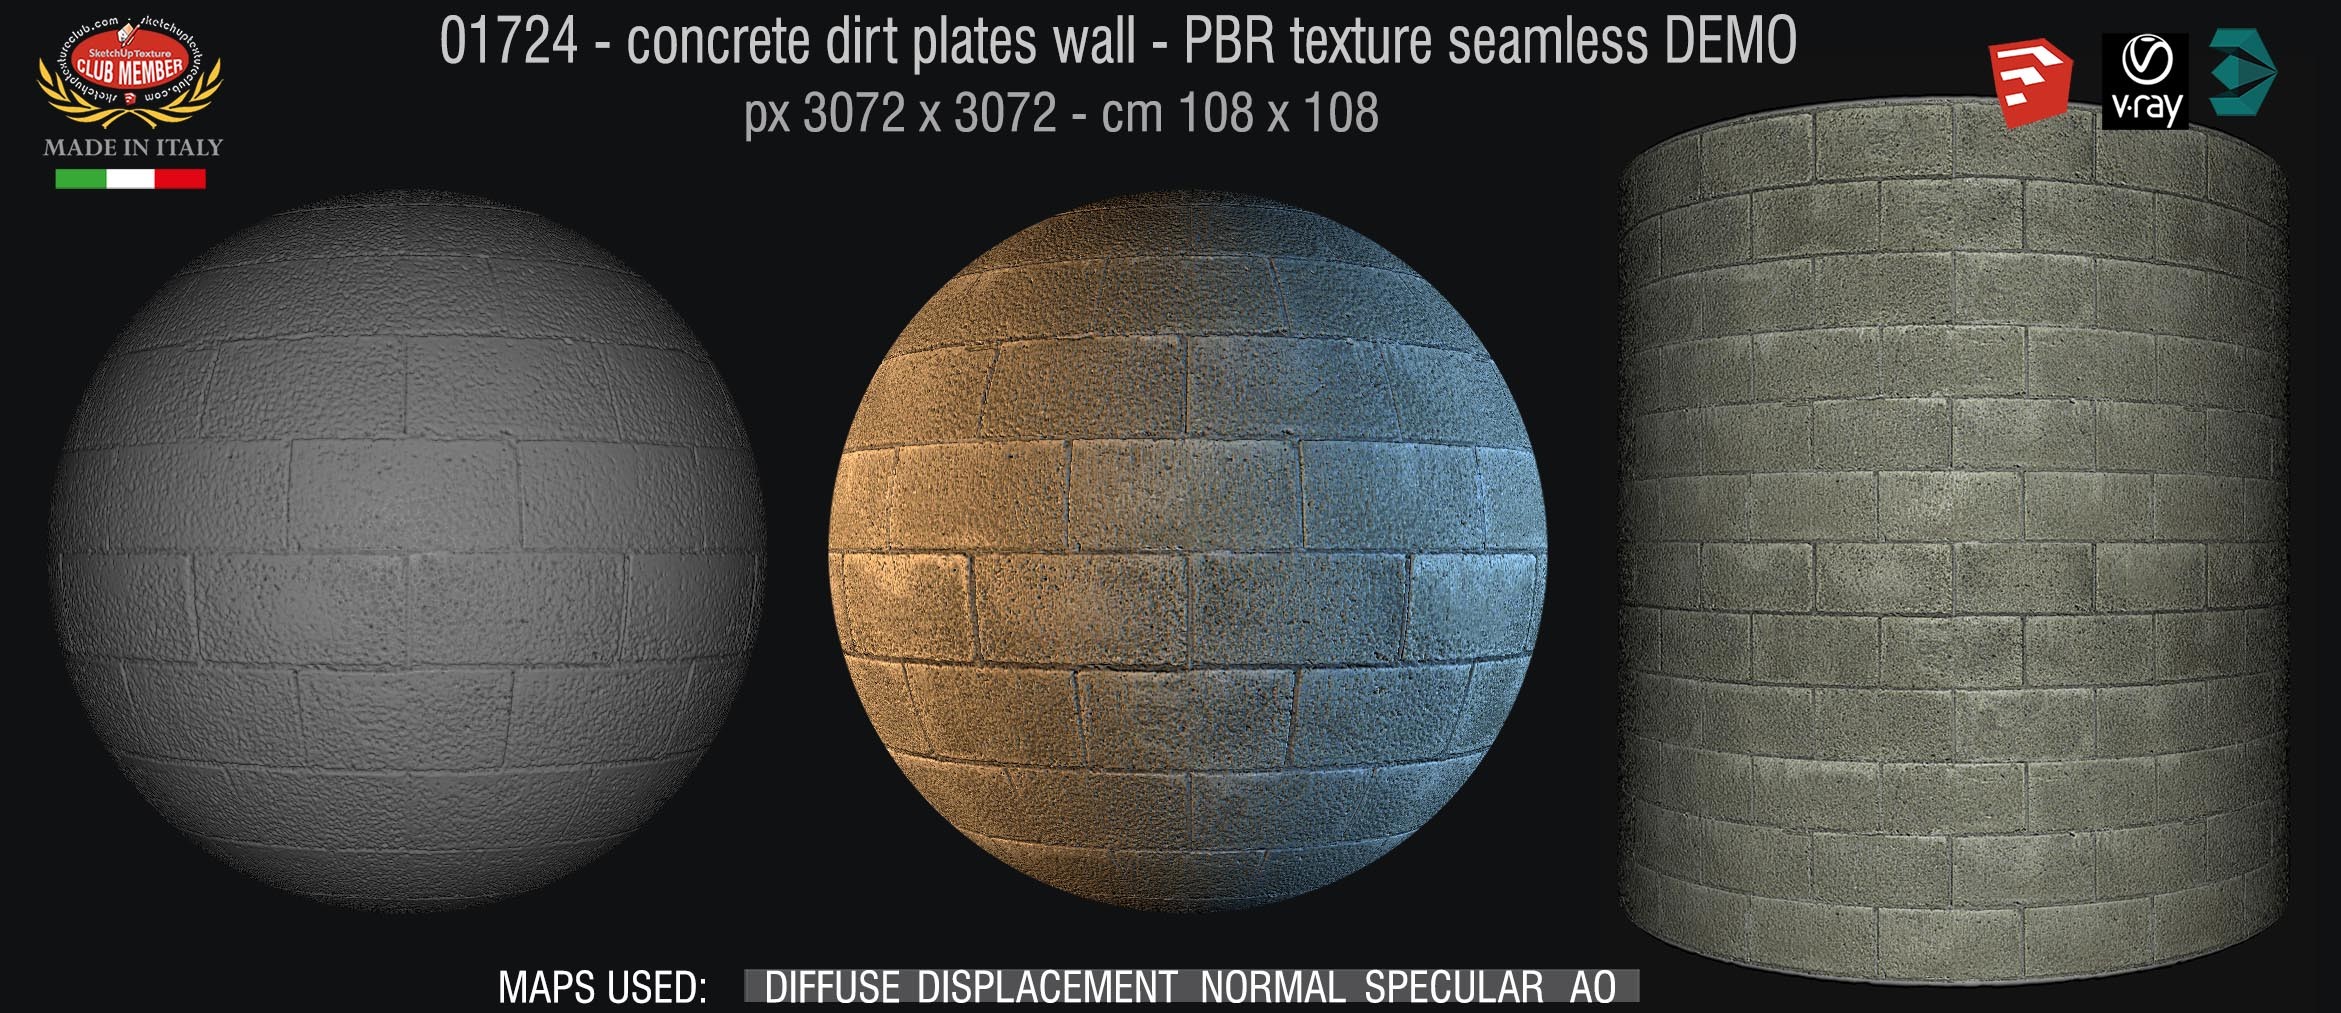 01724 concrete dirt plates wall PBR texture seamless DEMO